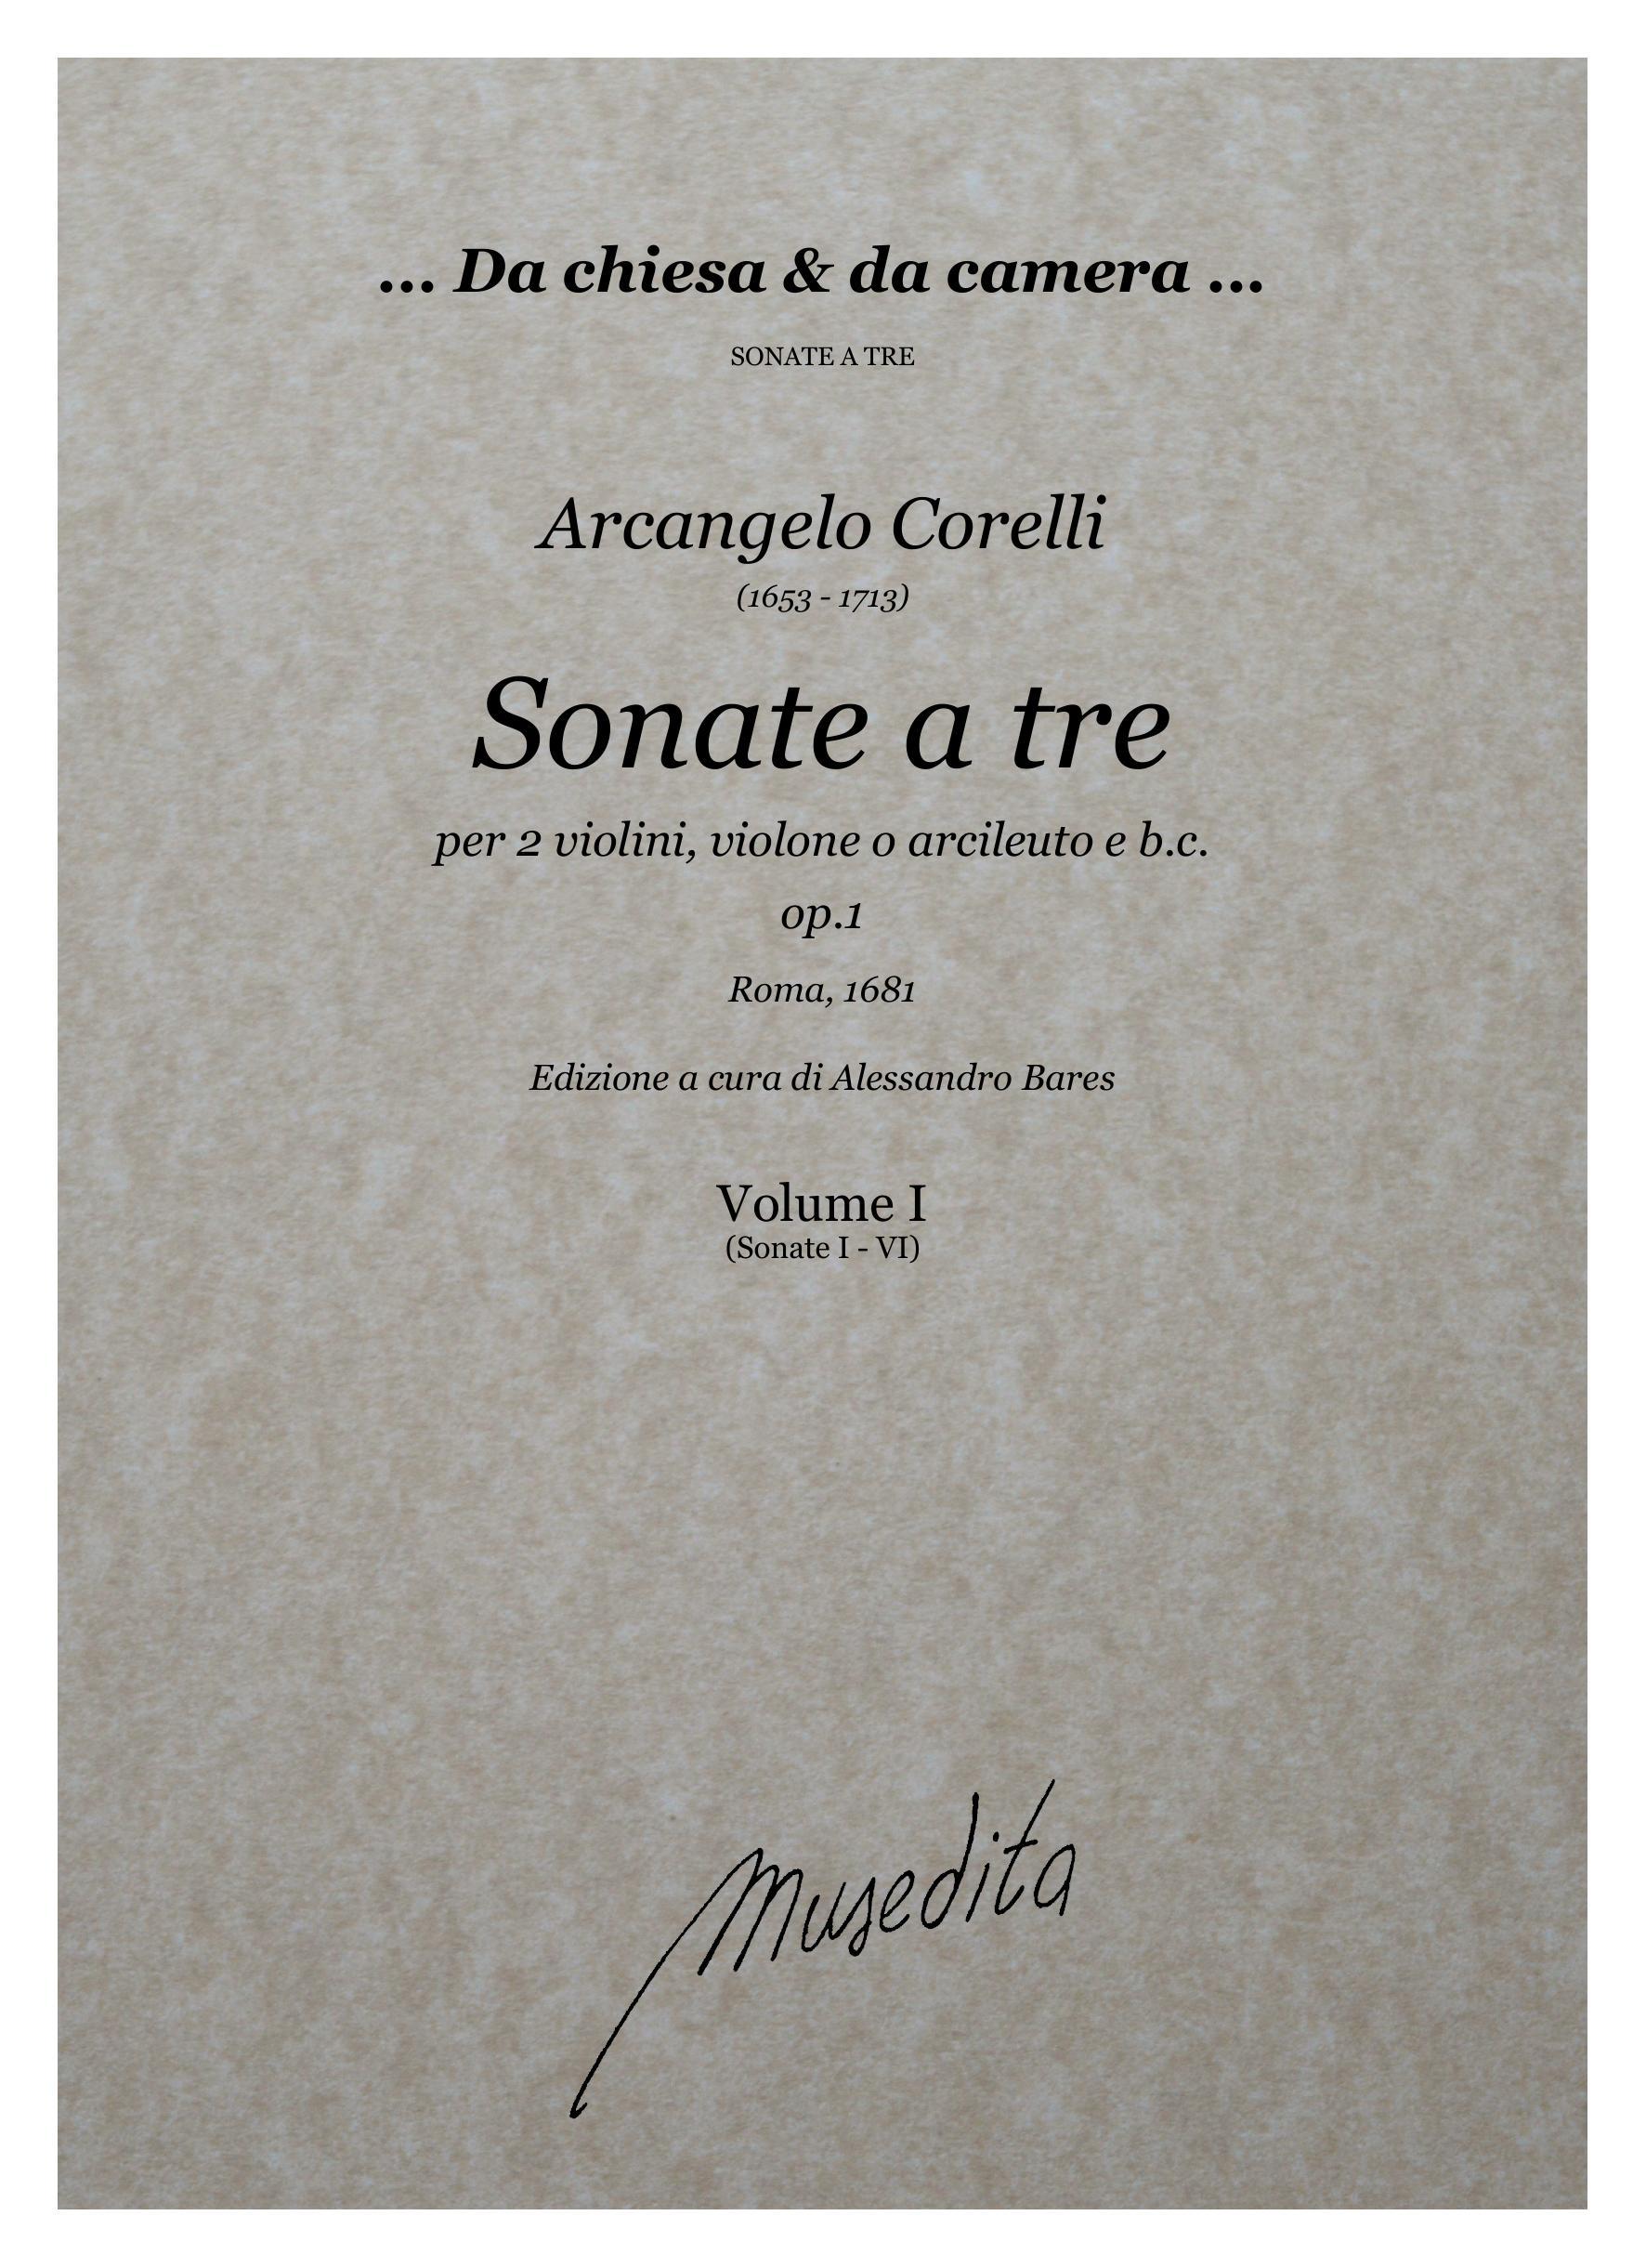 A.Corelli: Sonate a tre op.1 (Roma, 1681)